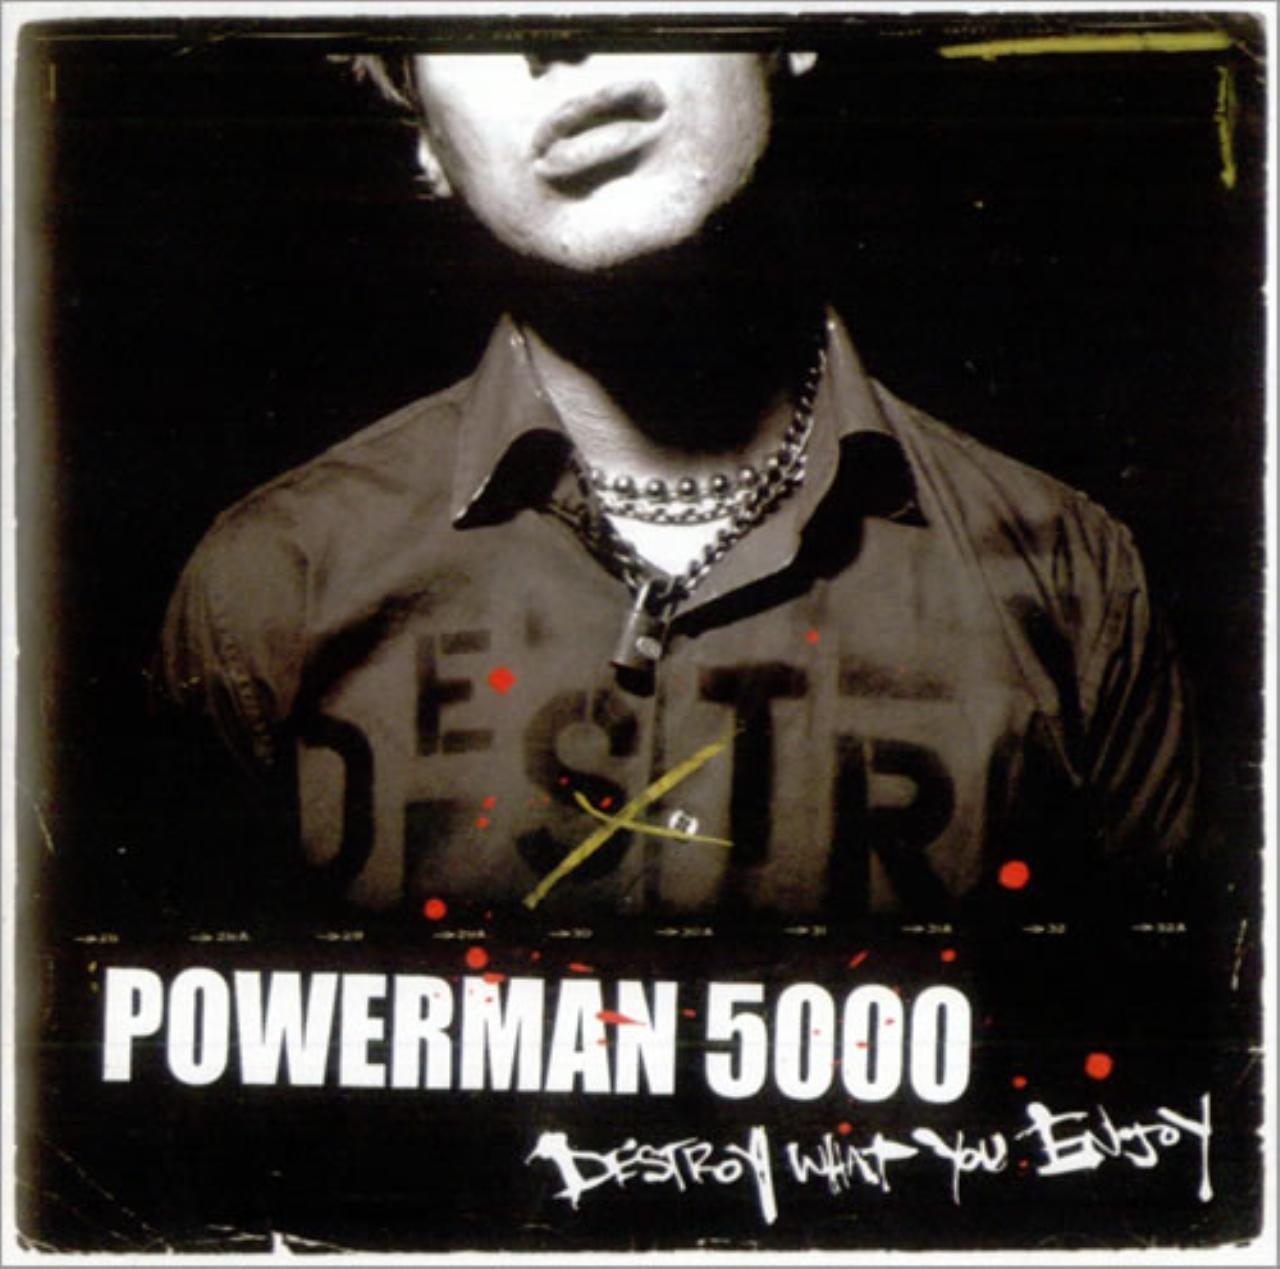 Powerman 5000- Destroy What You Enjoy - Darkside Records